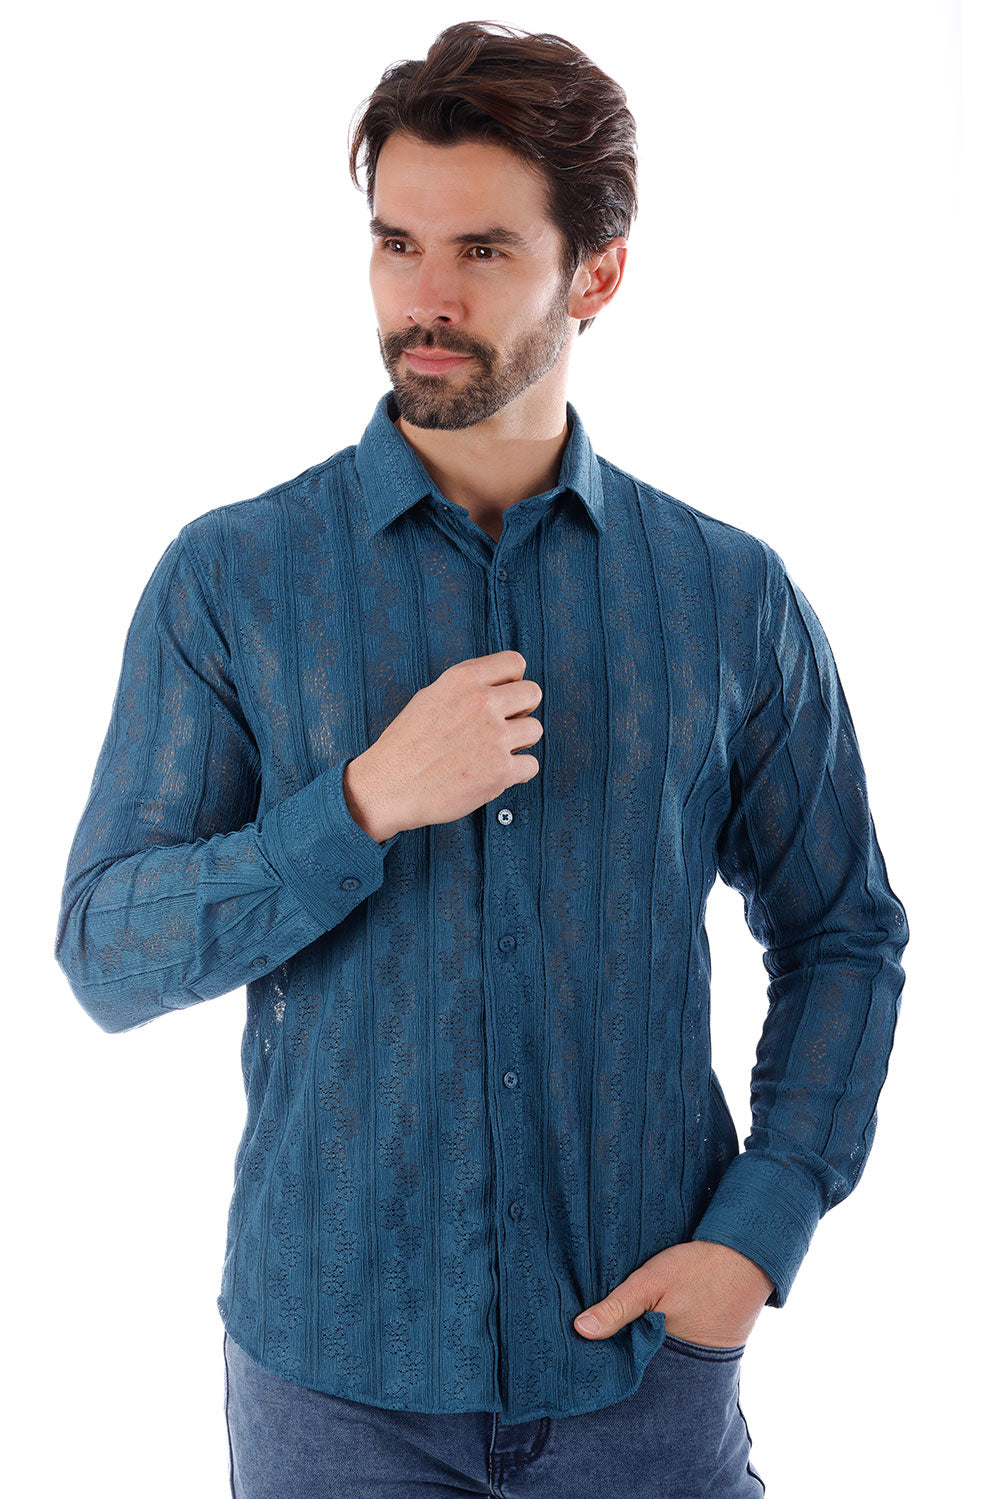 BARABAS Men's Floral Knitted Button Down Long Sleeve Shirt 4B44 Blue